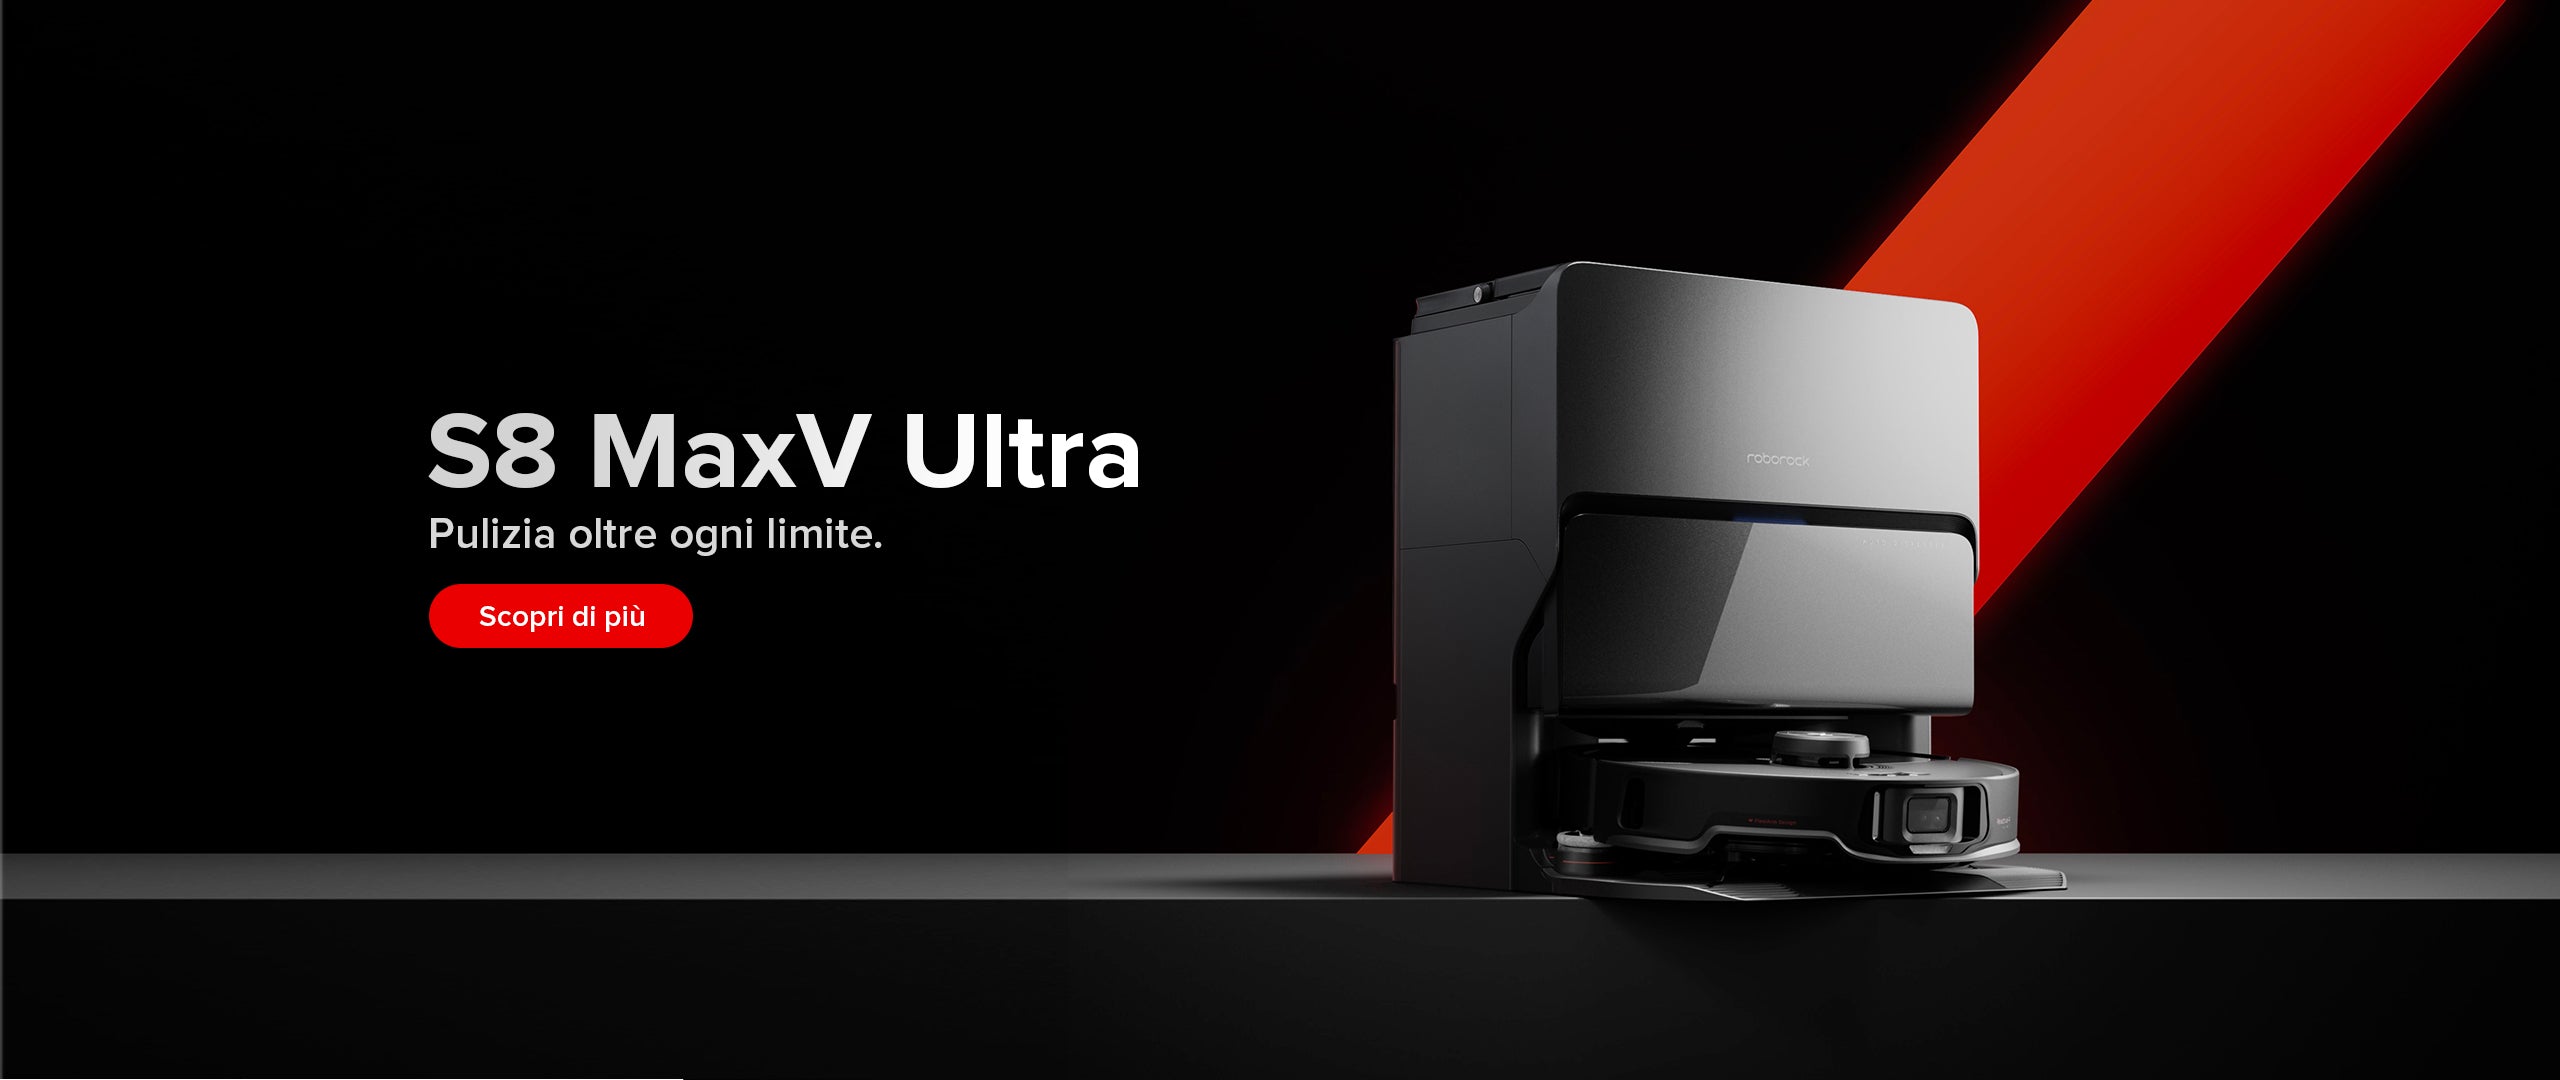 S8 MaxV Ultra